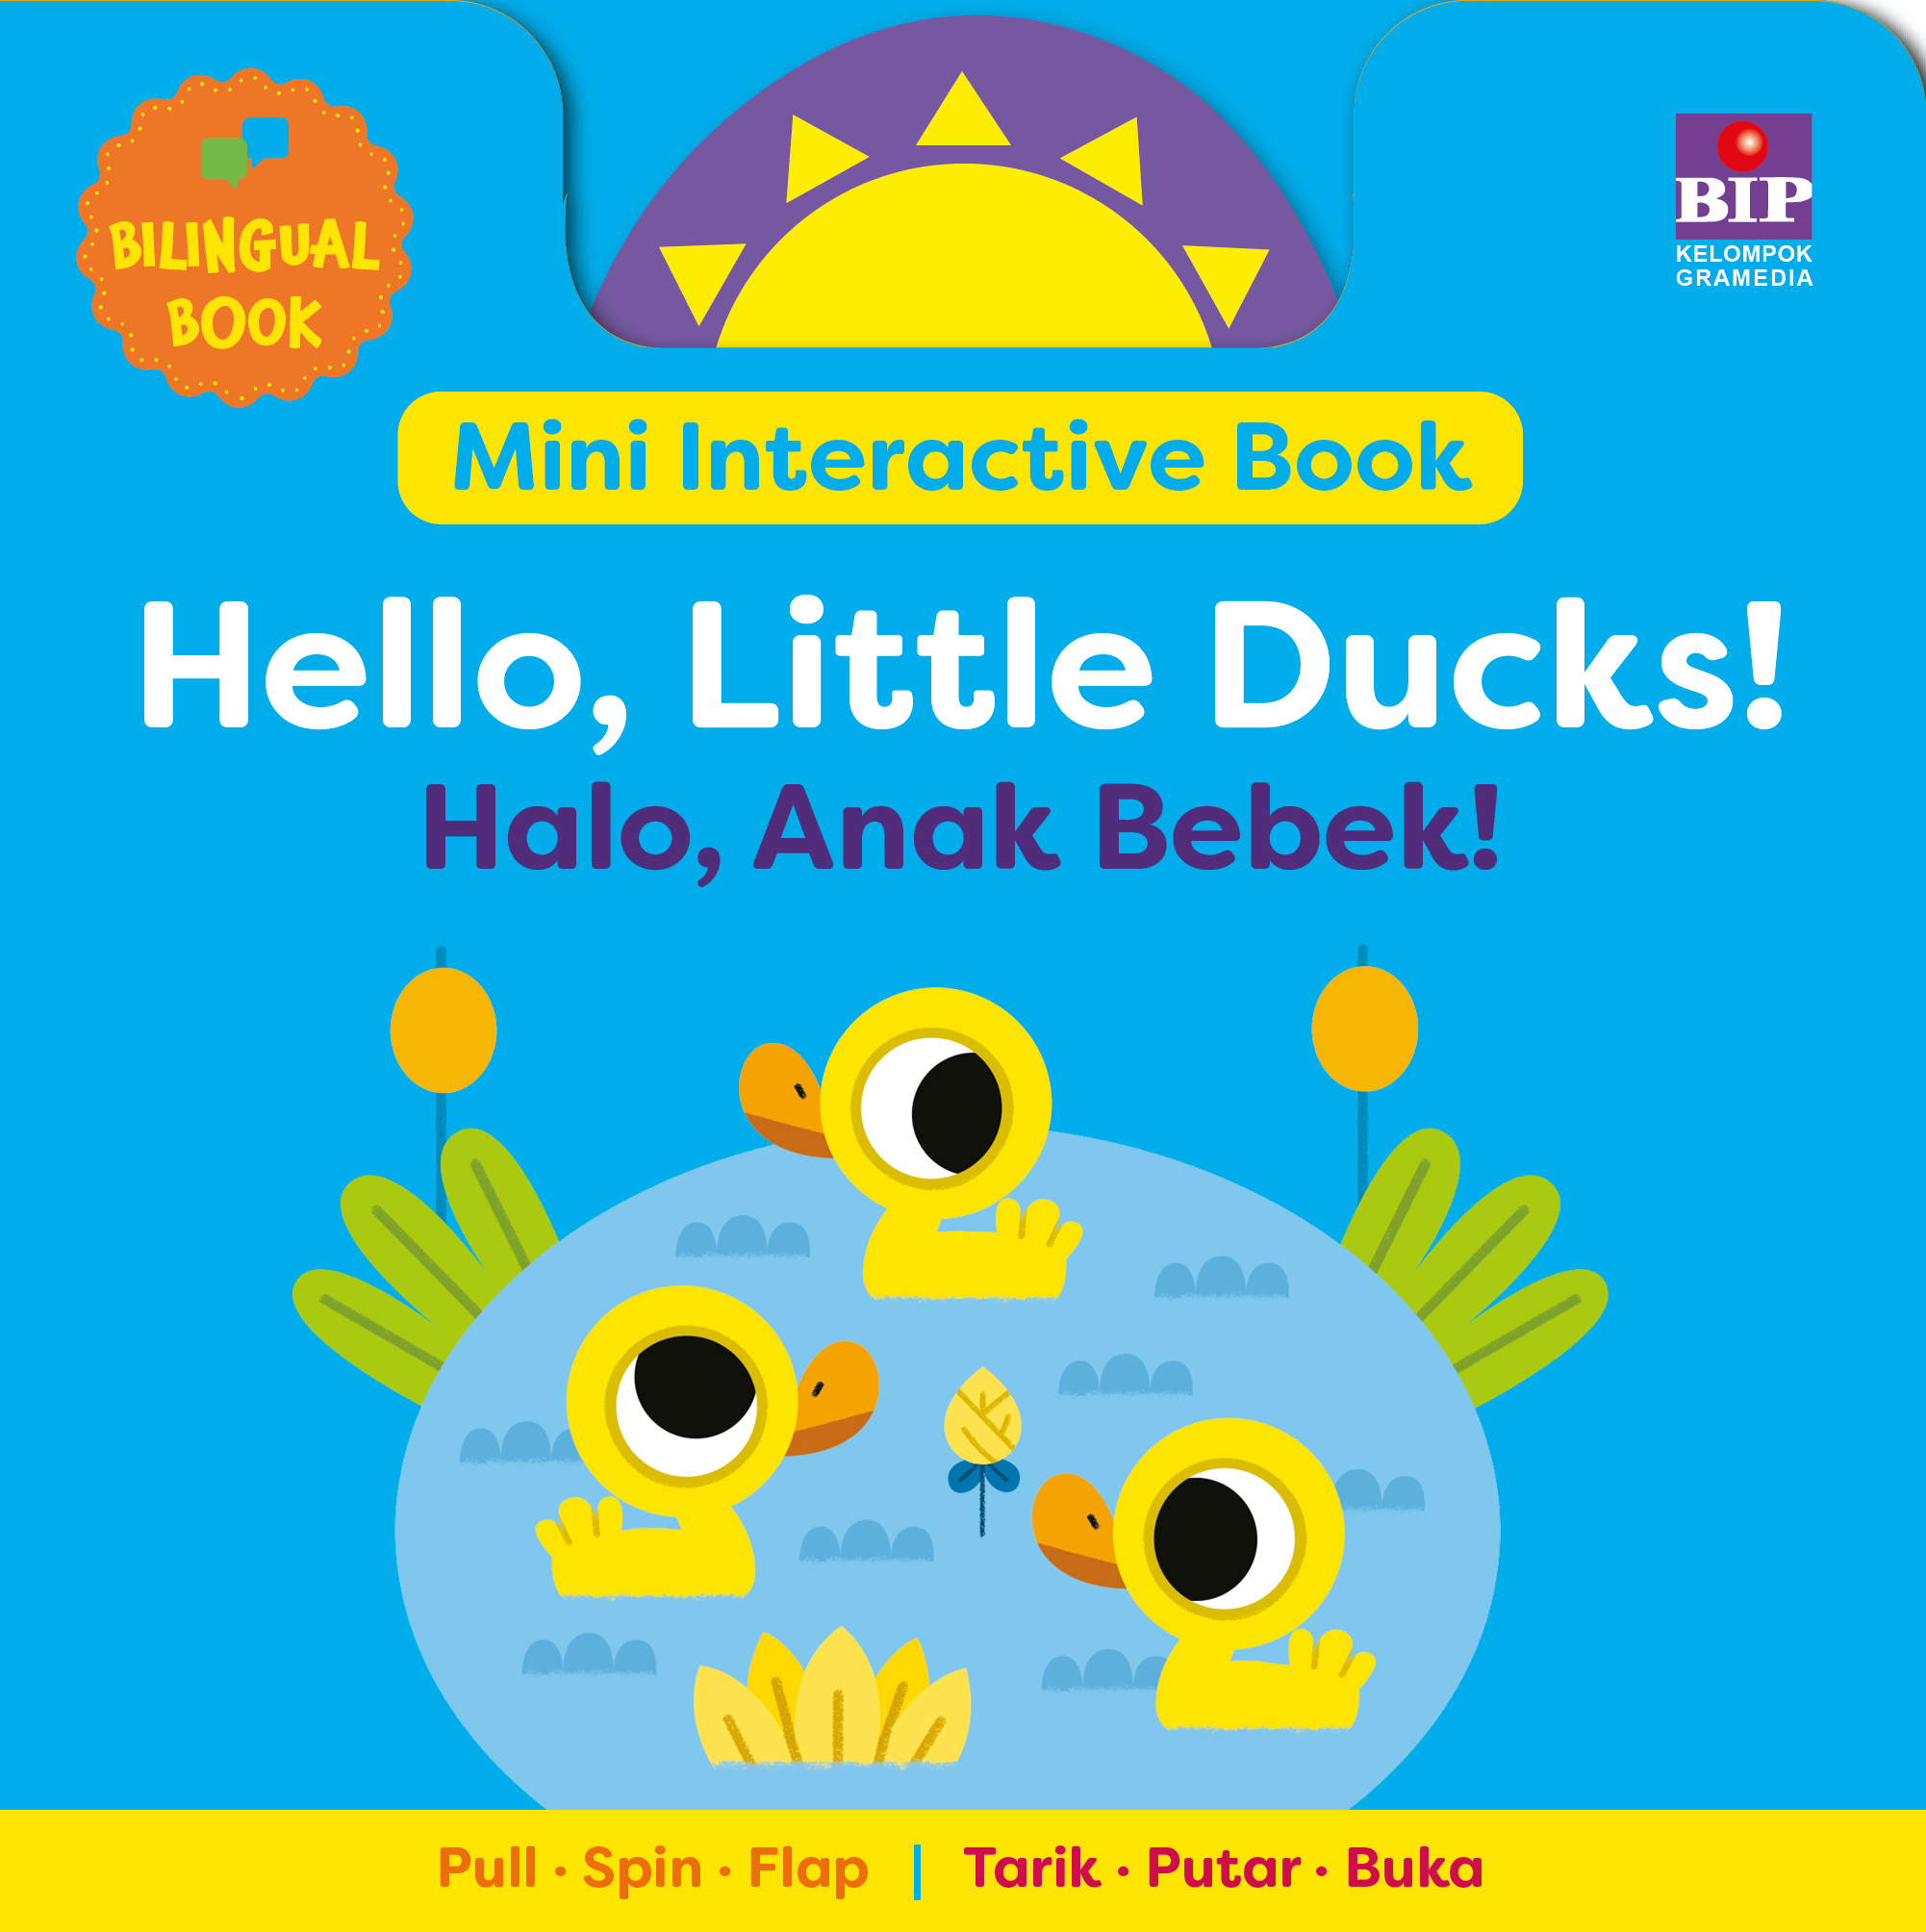 Mini Interactive Book: Hello, Little Ducks!